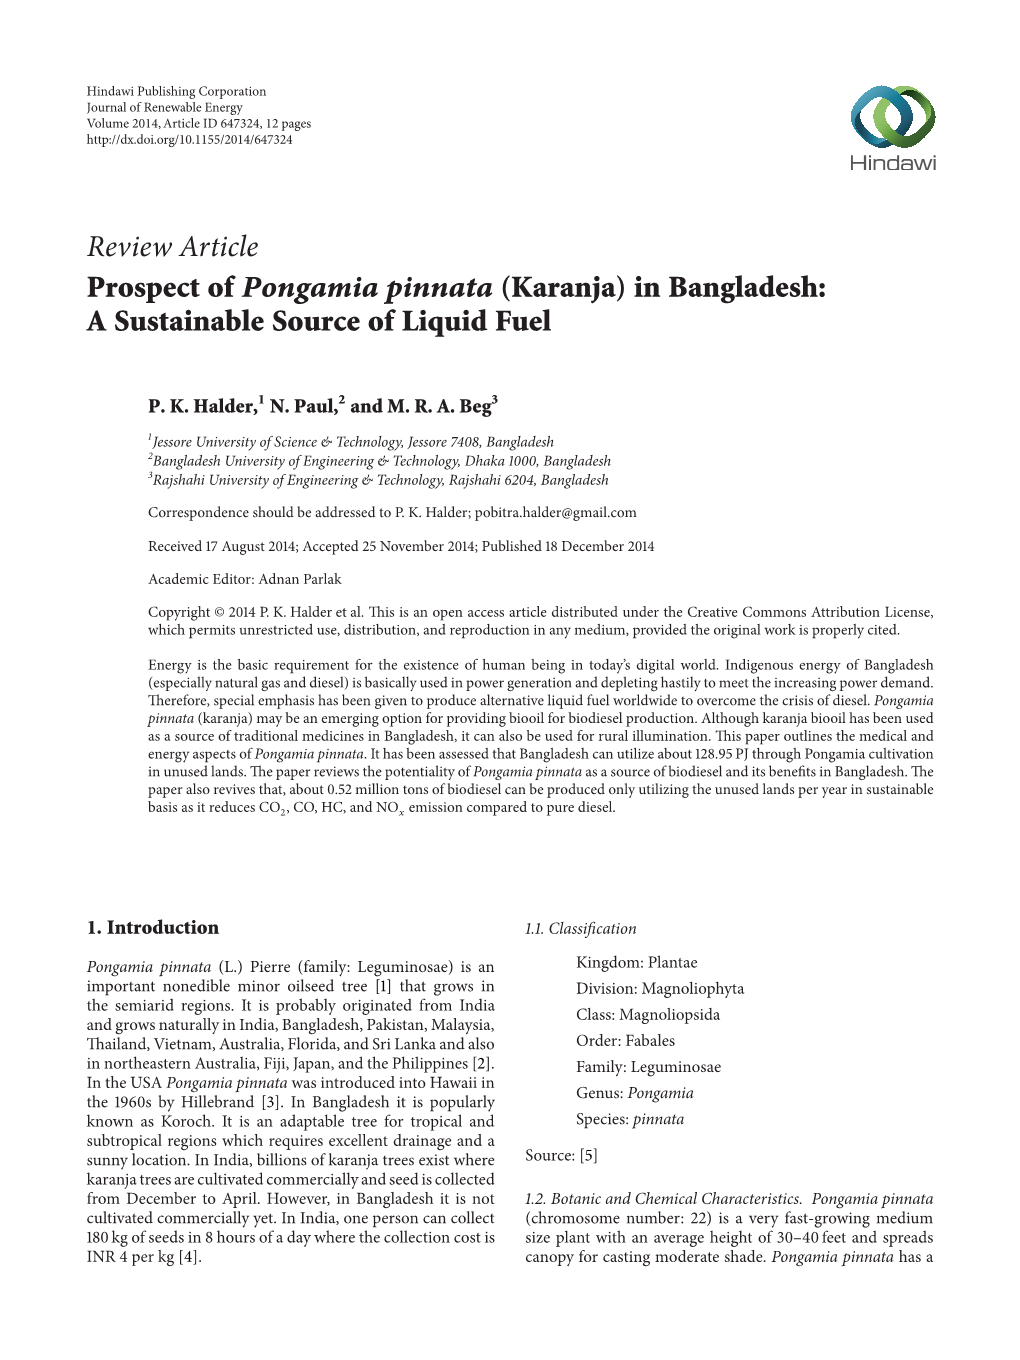 Prospect of Pongamia Pinnata (Karanja) in Bangladesh: a Sustainable Source of Liquid Fuel